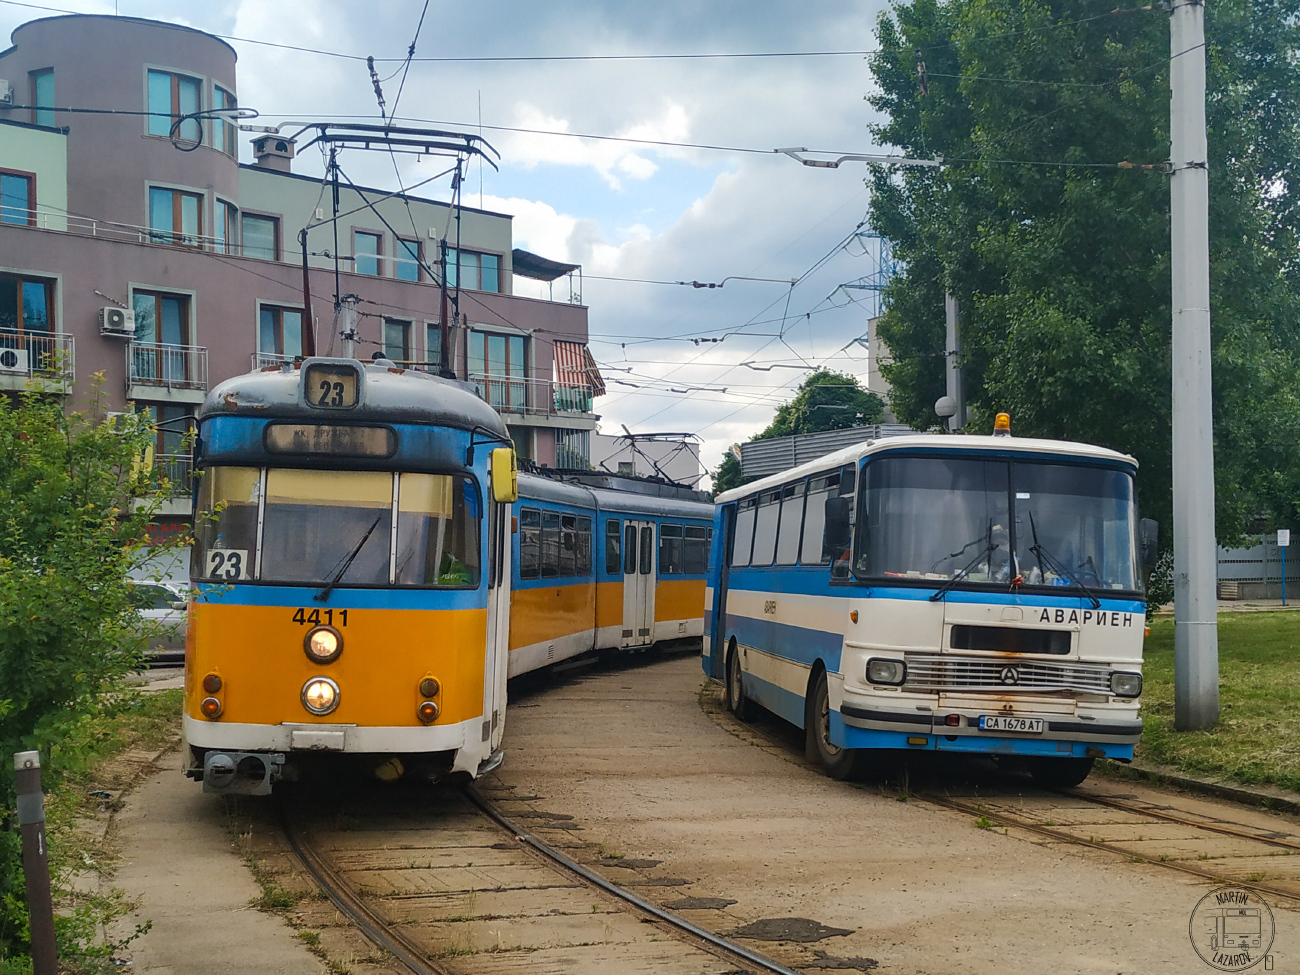 Sofia, Duewag GT8 nr. 4411; Sofia — Service vehicles